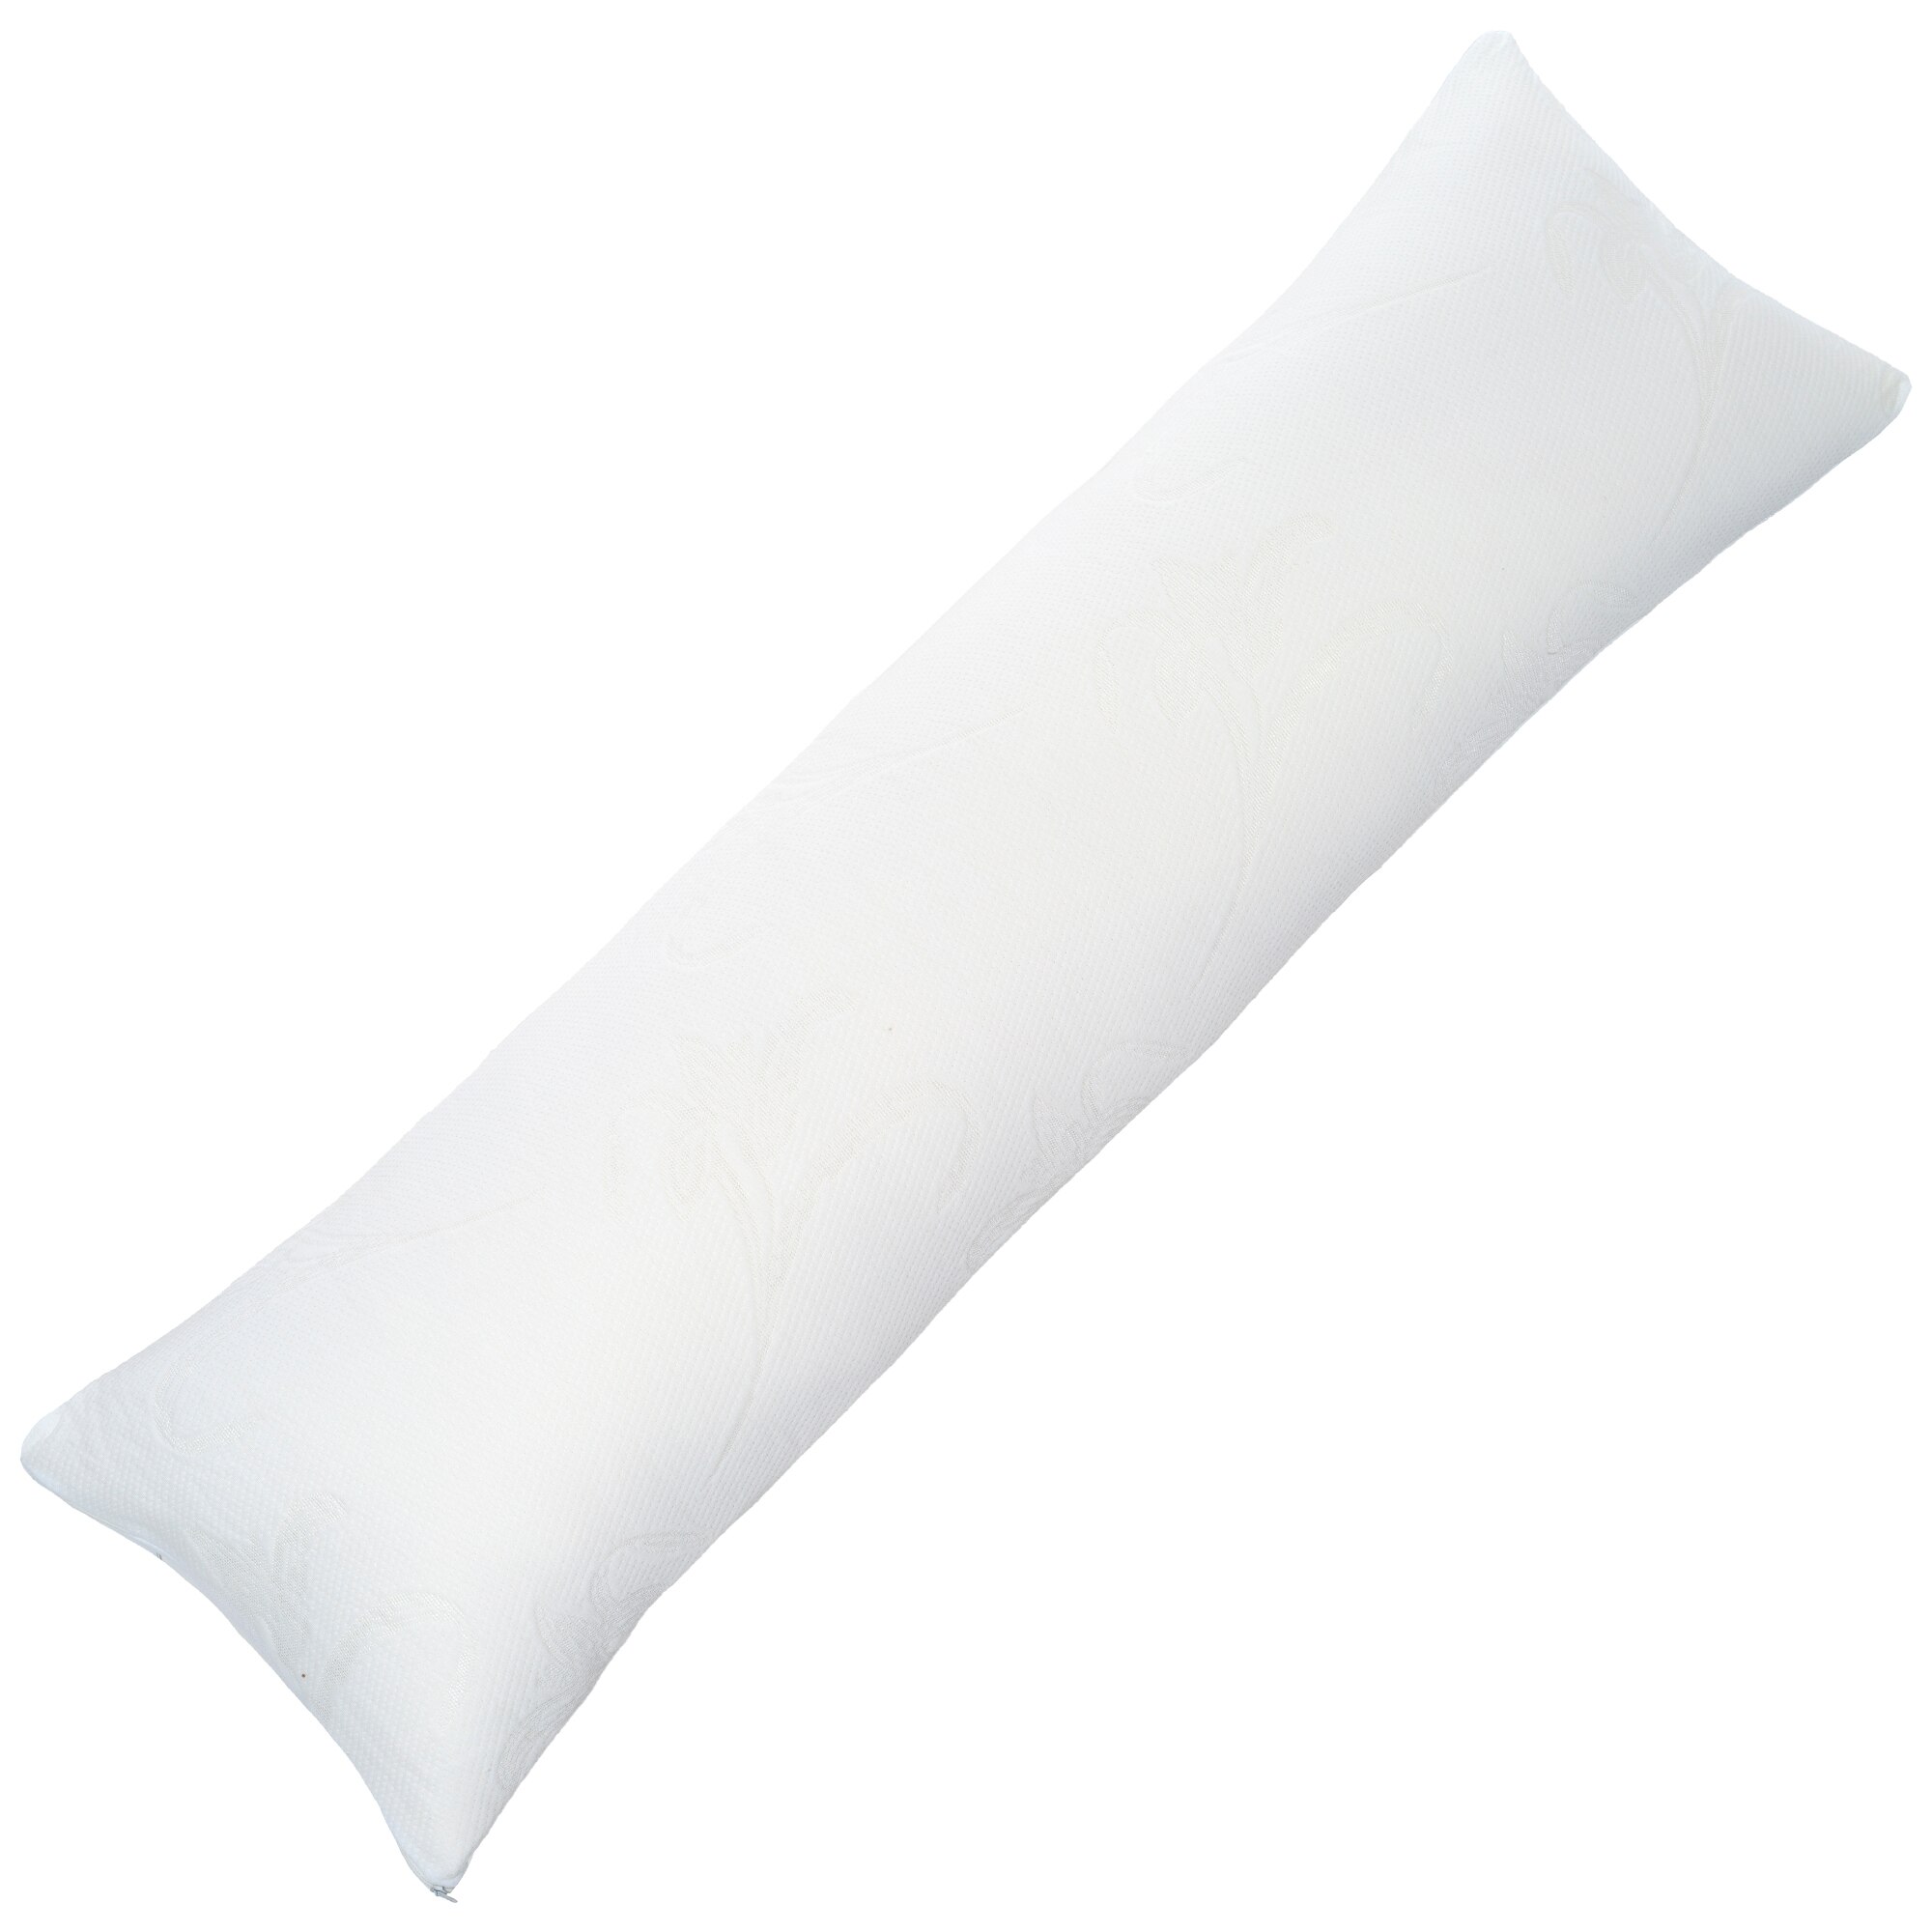 Remedy Complete Comfort Shredded Memory Foam Body Pillow